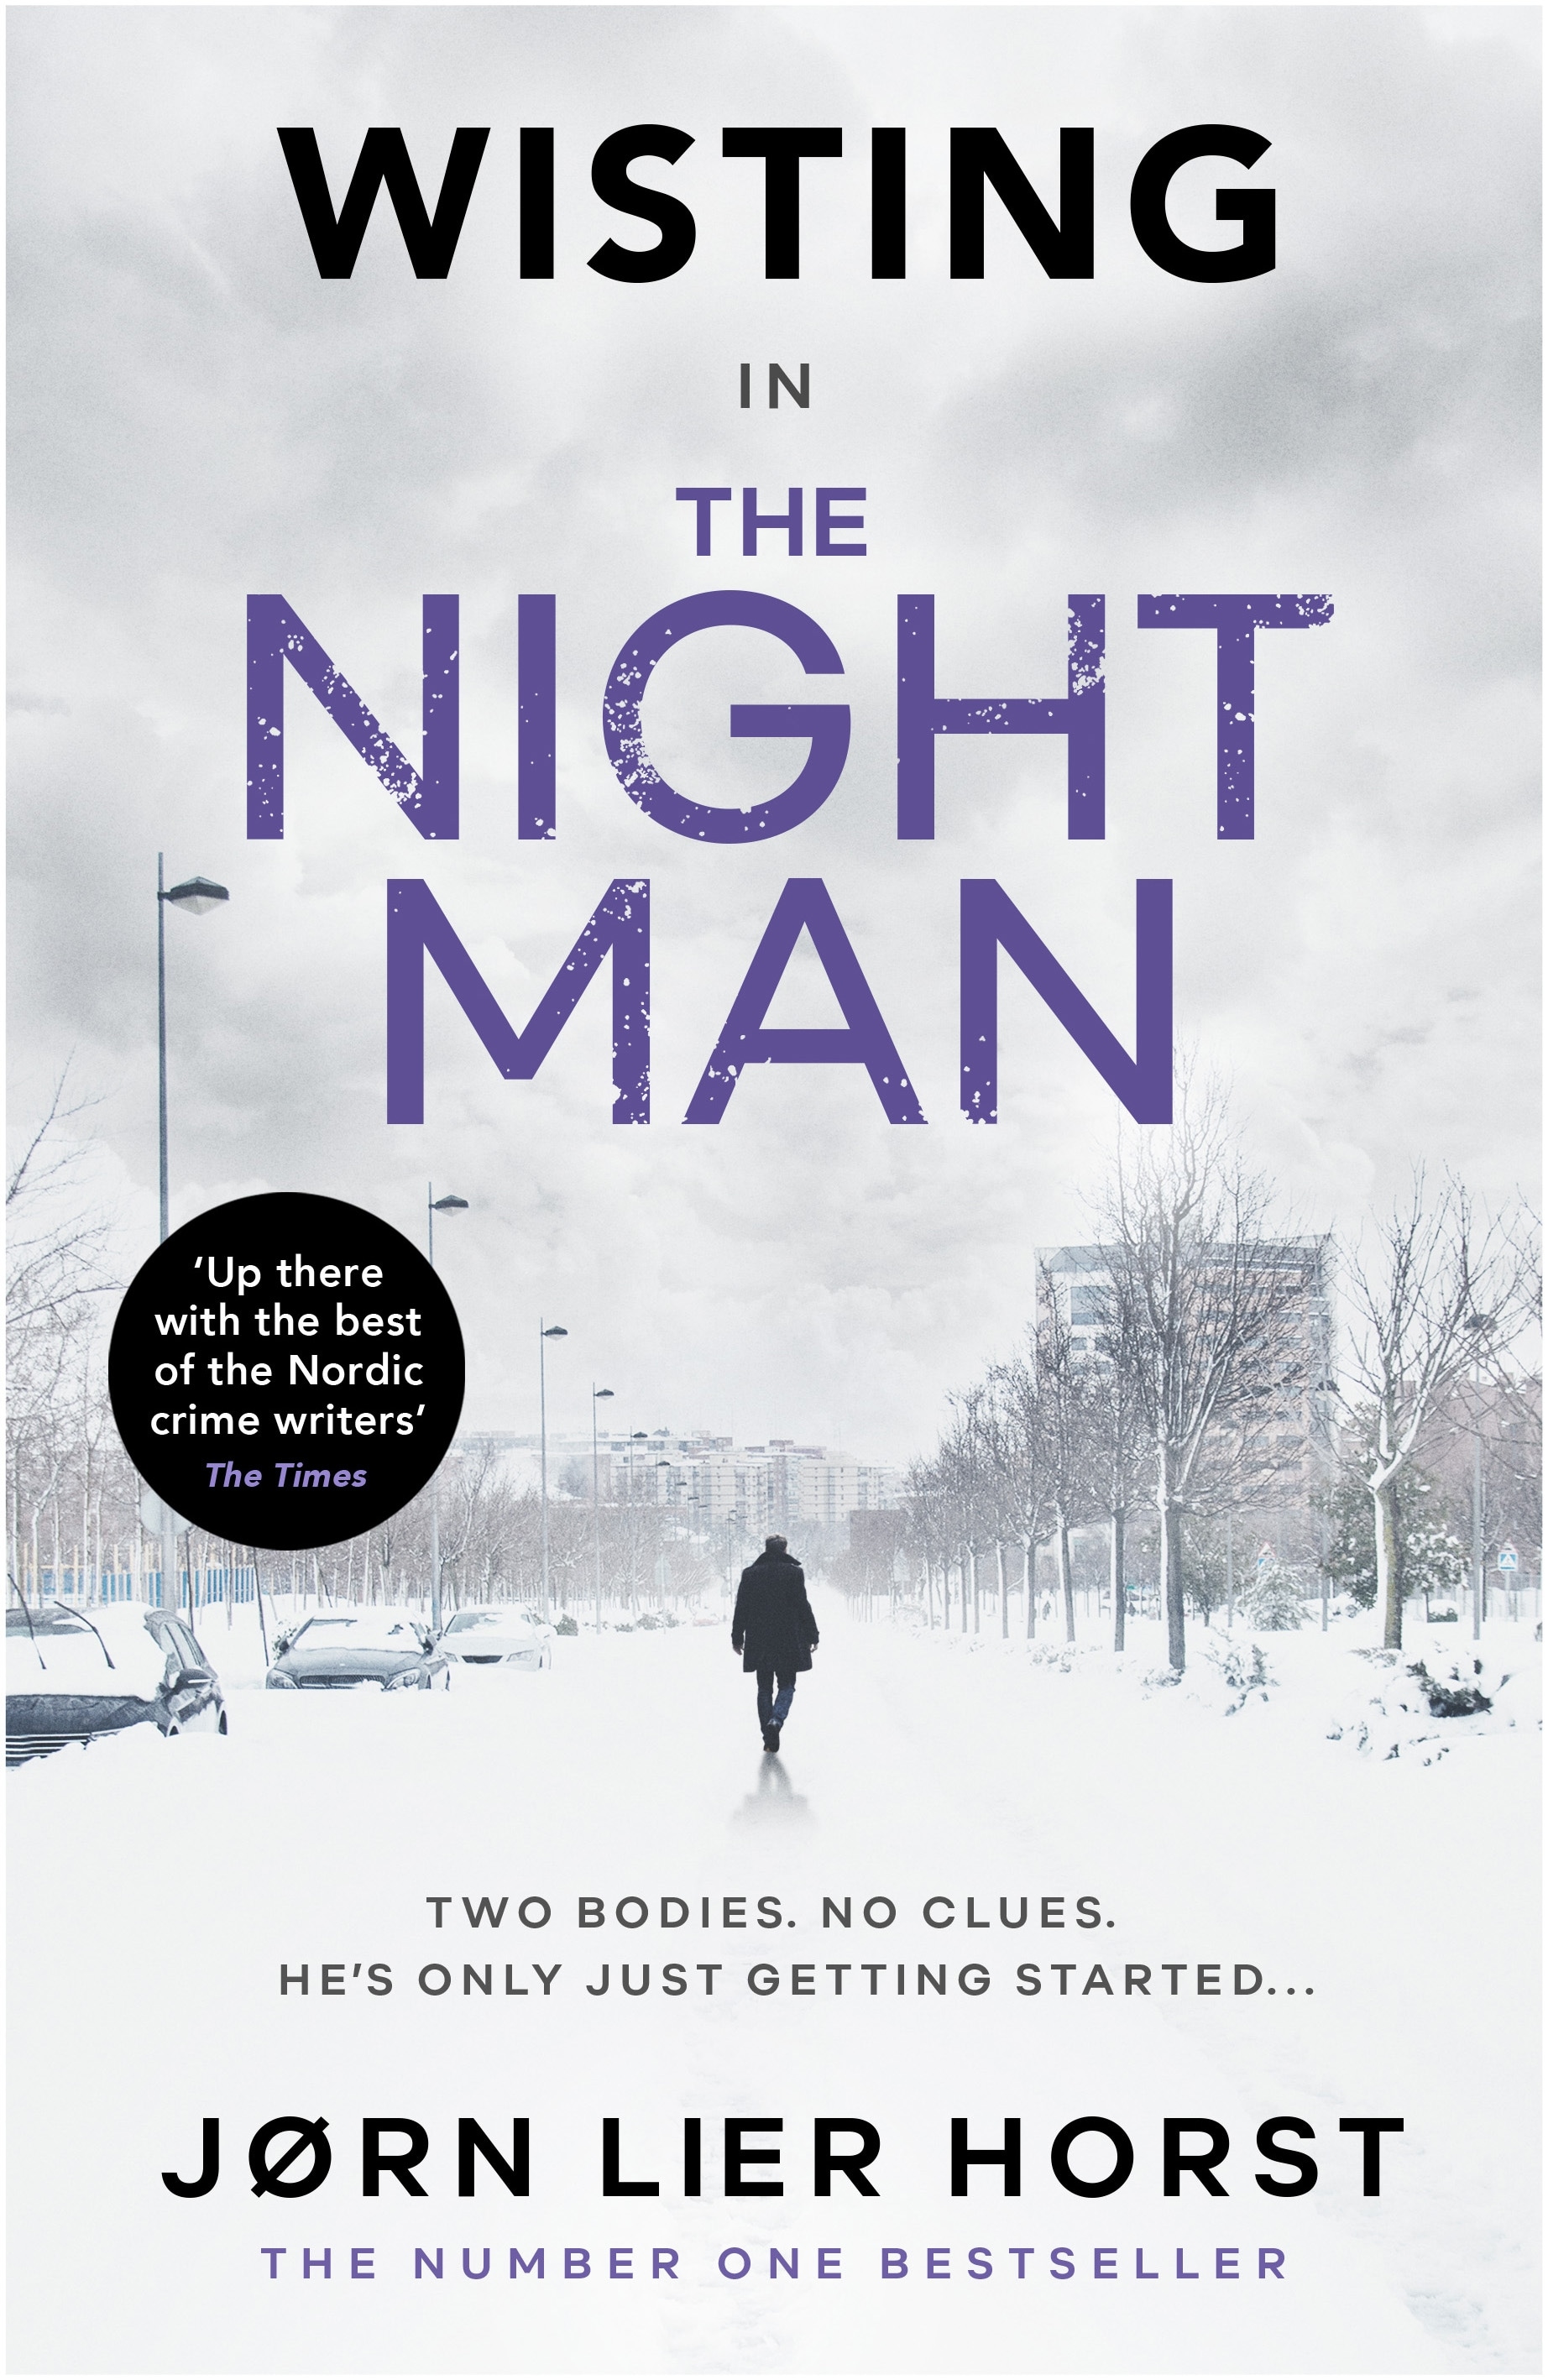 Book “The Night Man” by Jørn Lier Horst — July 7, 2022